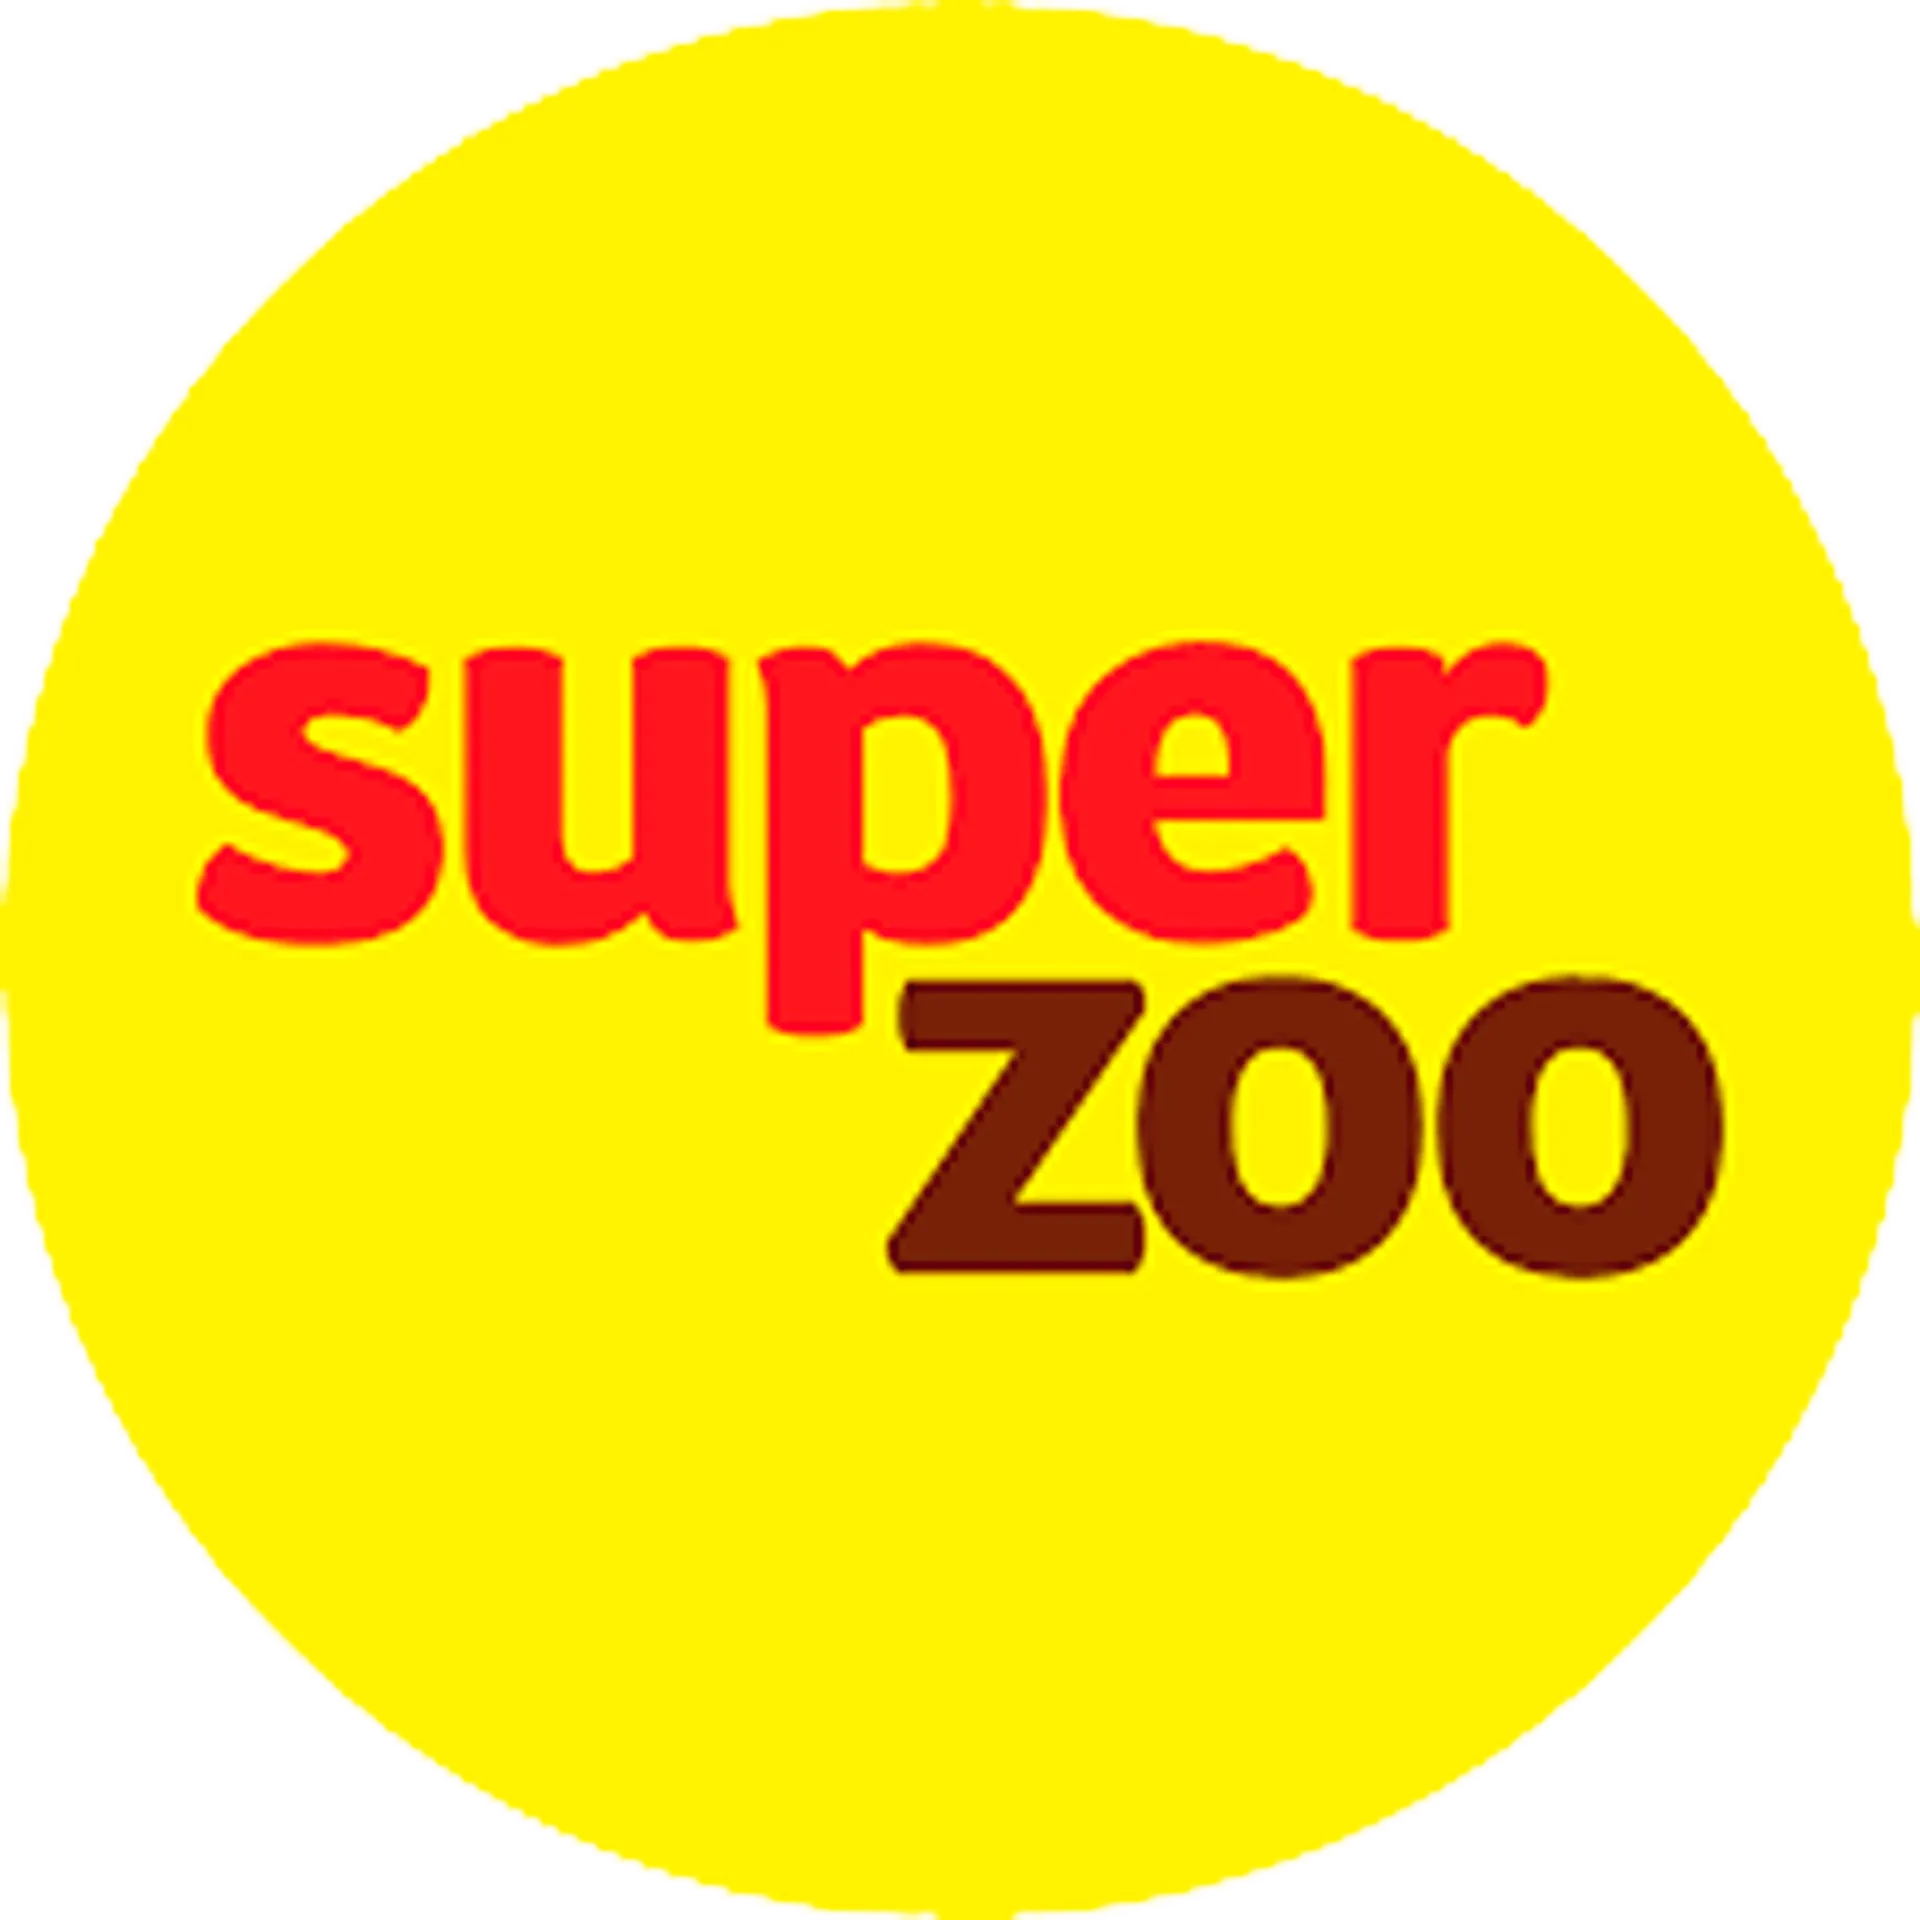 SUPER ZOO logo